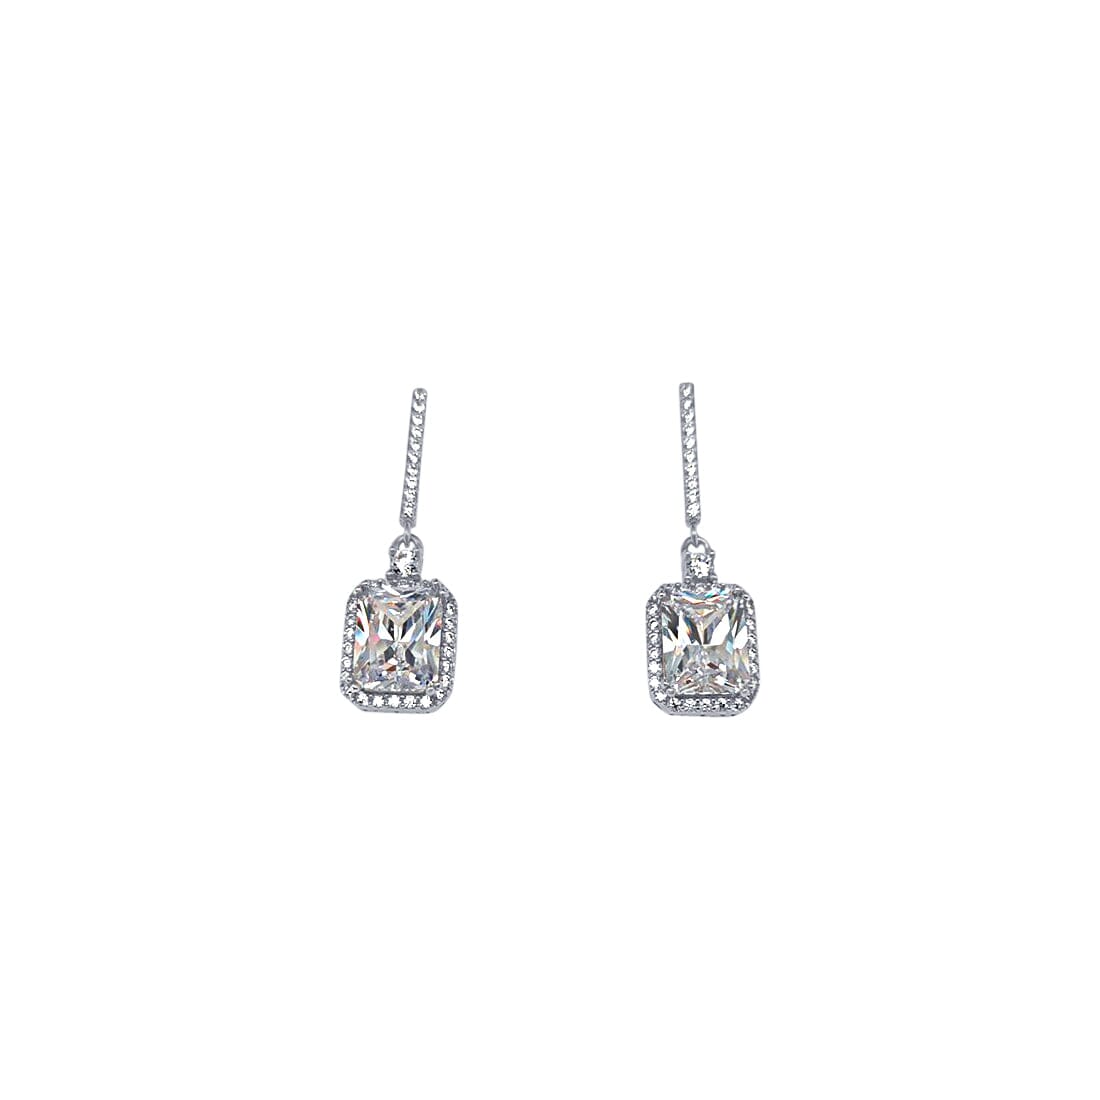 Rectangular Drop Stud Earrings with Cubic Zirconia in Sterling Silver Earrings Bevilles 